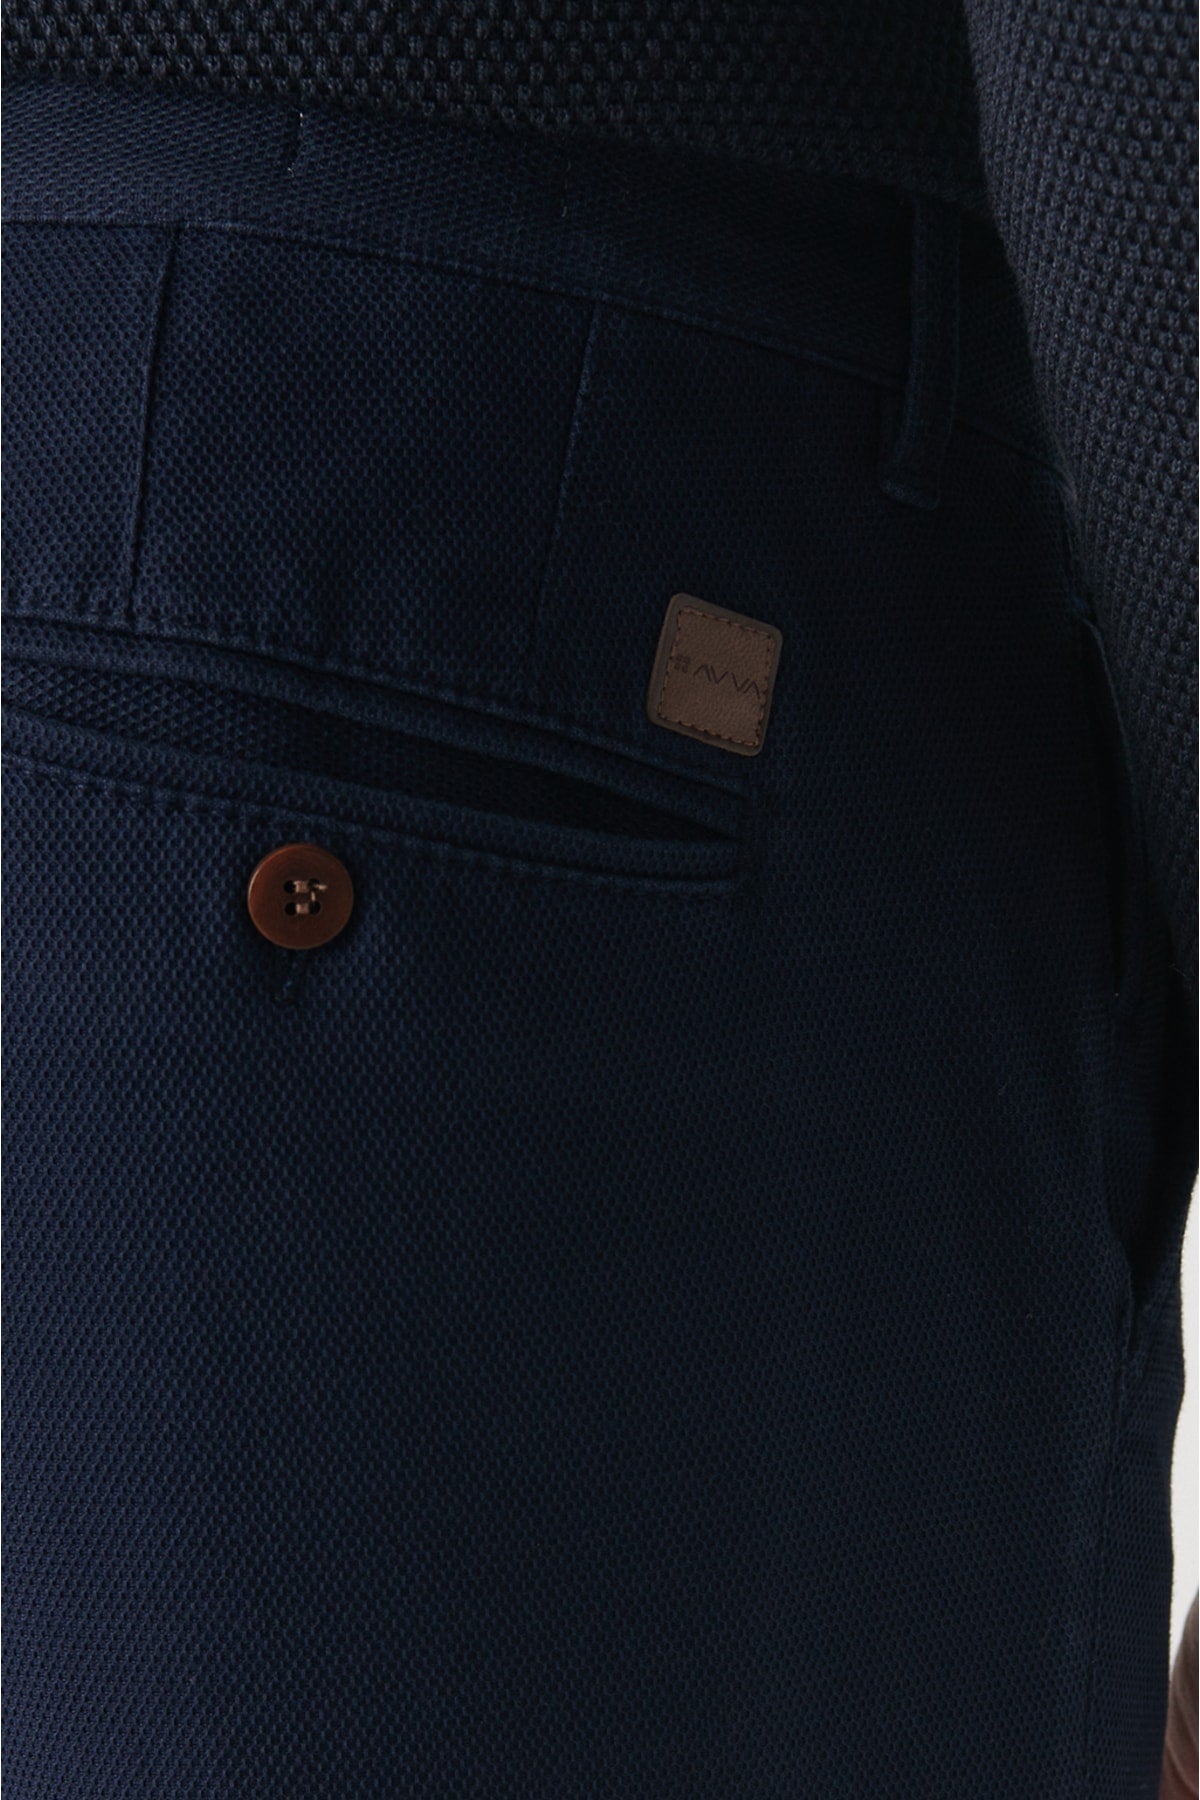 Men's navy blue honeycomb textured cotton slim fit pants a22y3027